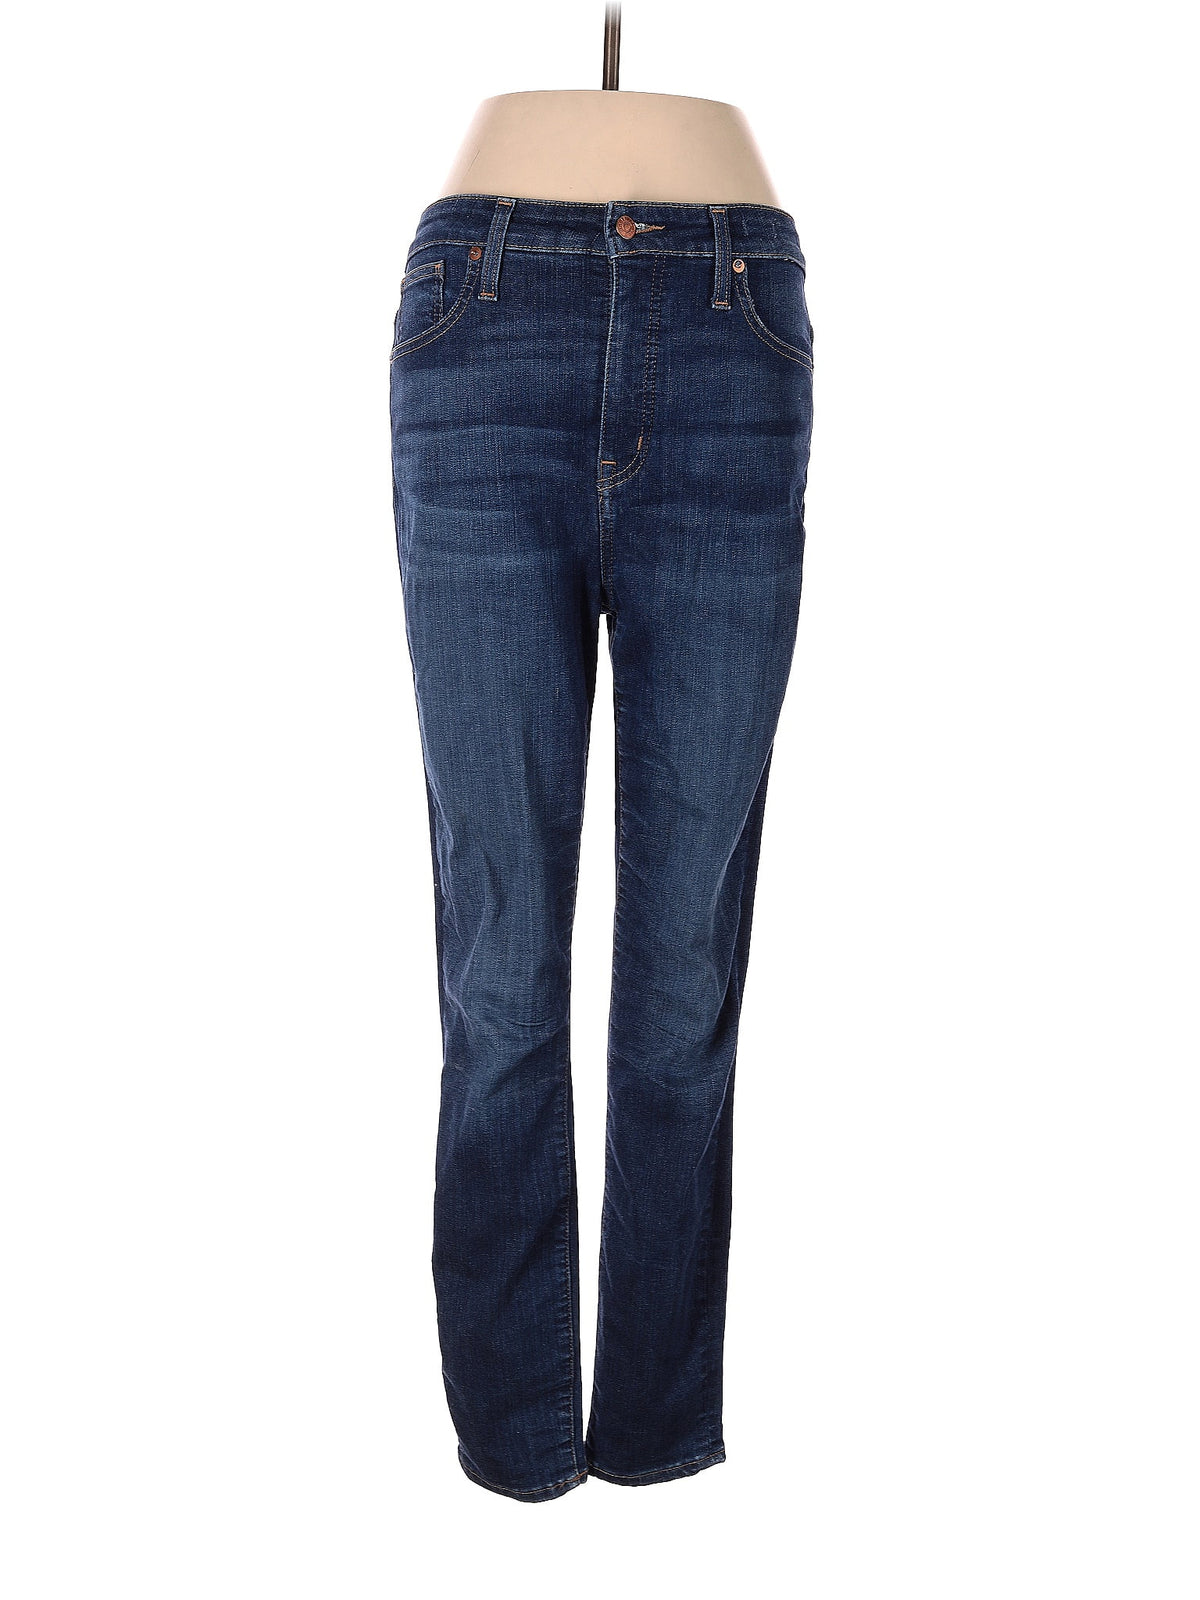 High-Rise Straight-leg Jeans in Medium Wash waist size - 29